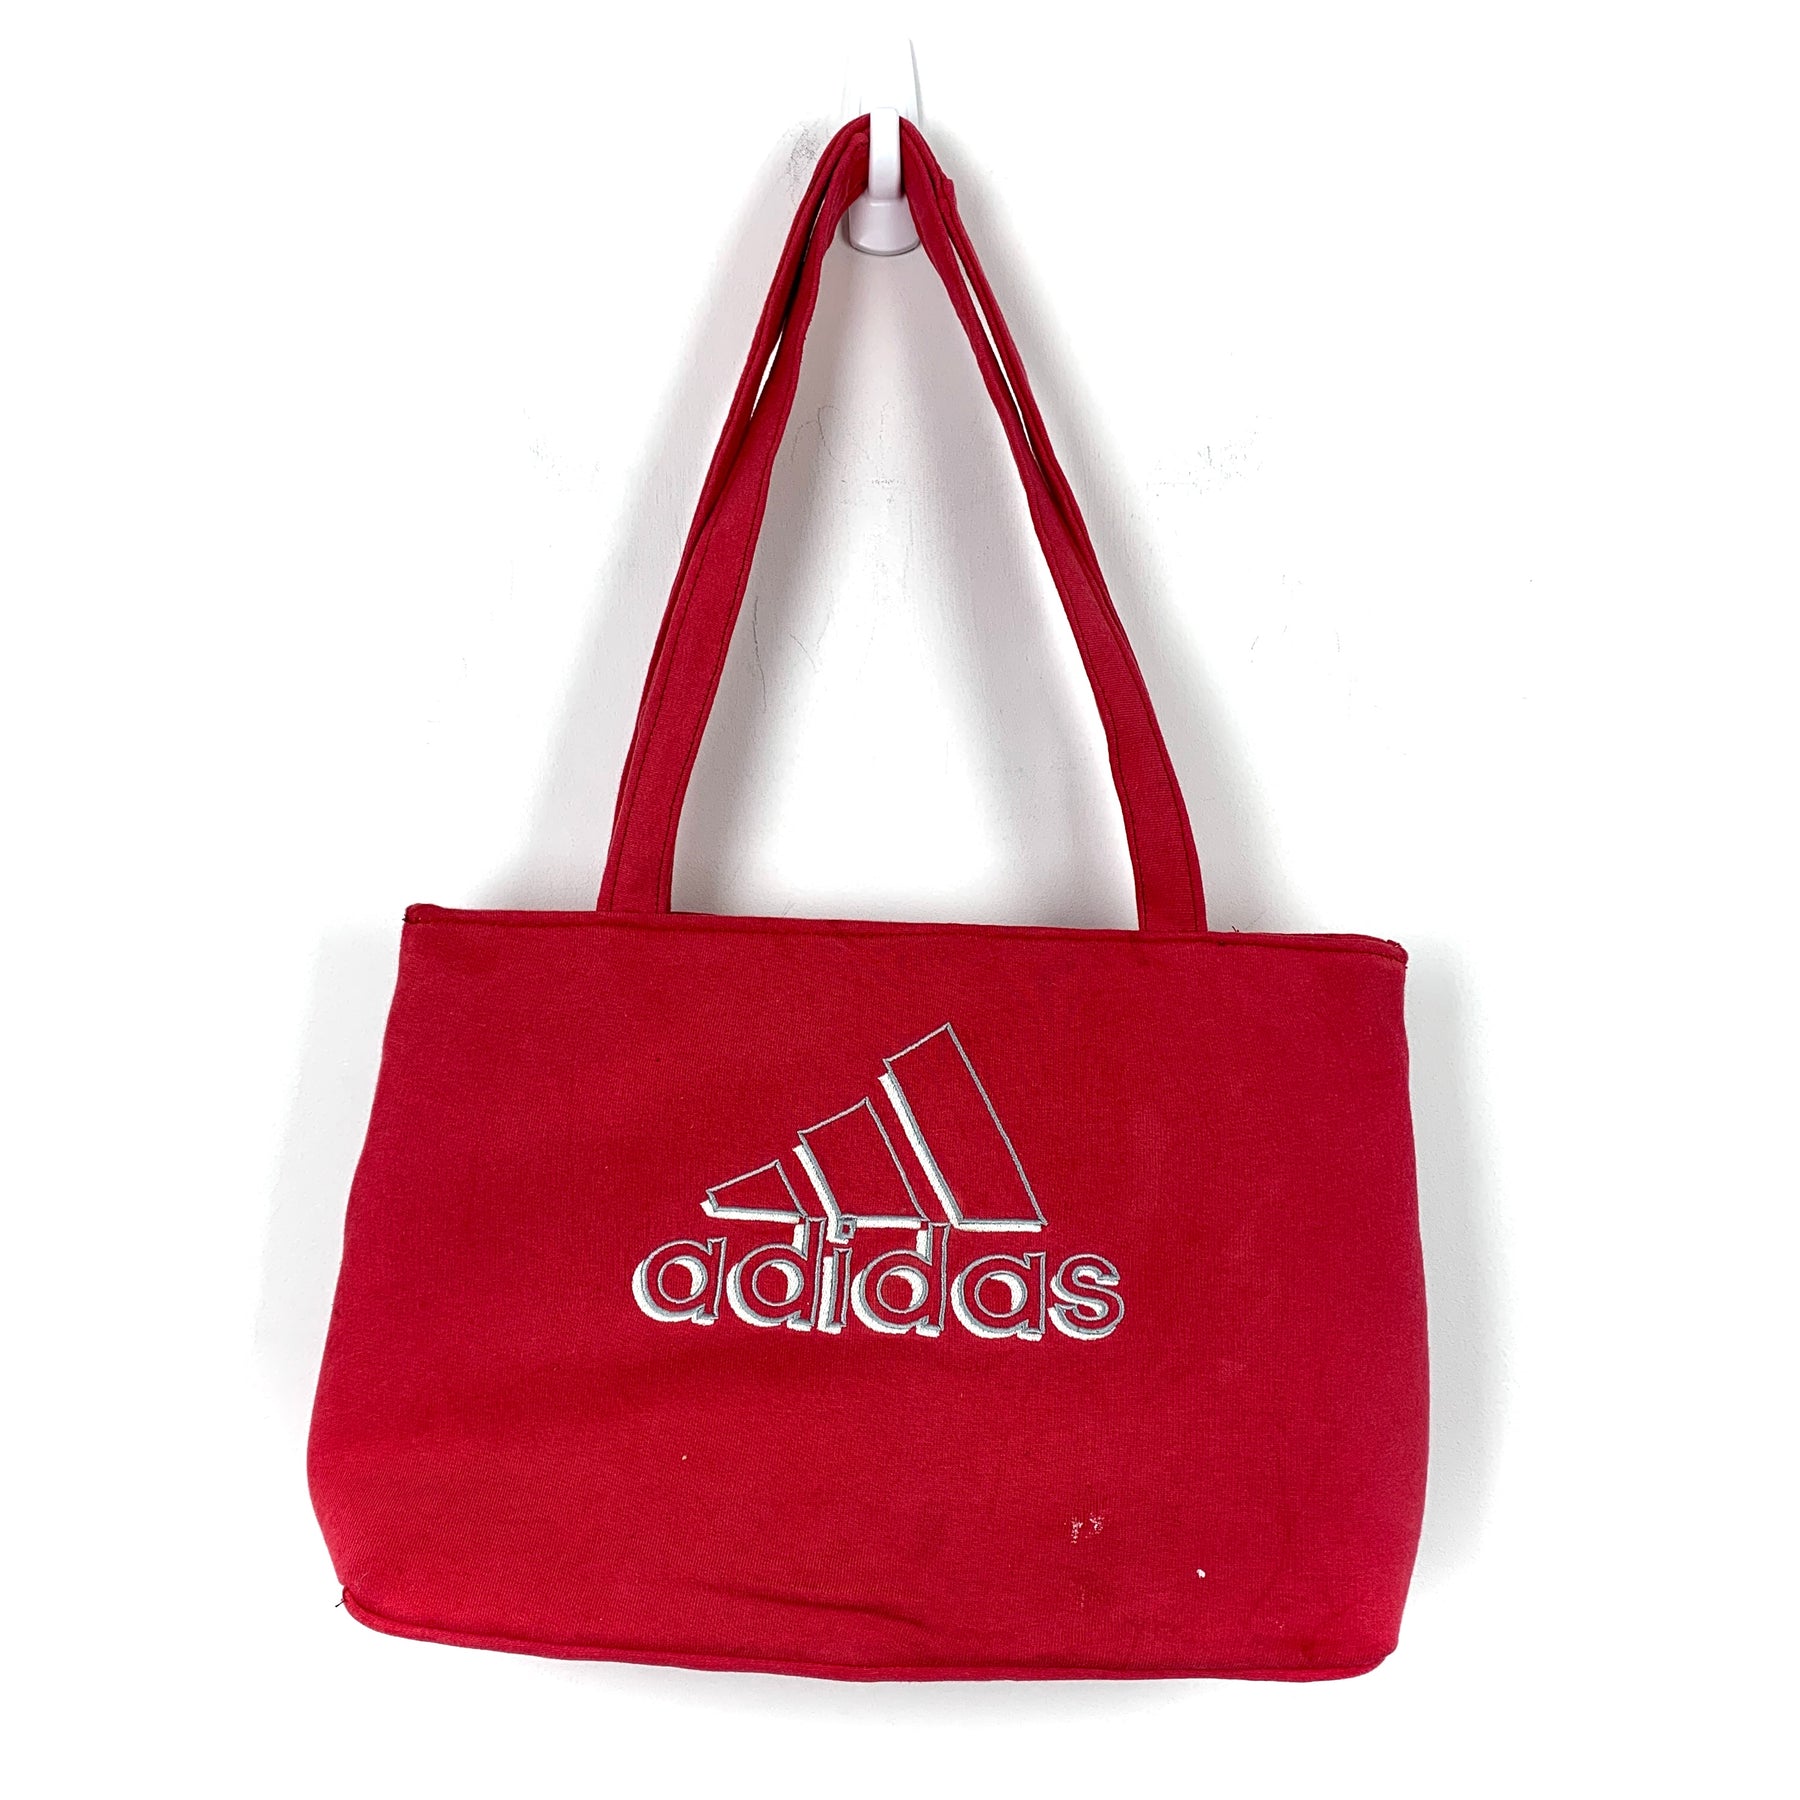 Vibn Studios x Adidas Tote Bag